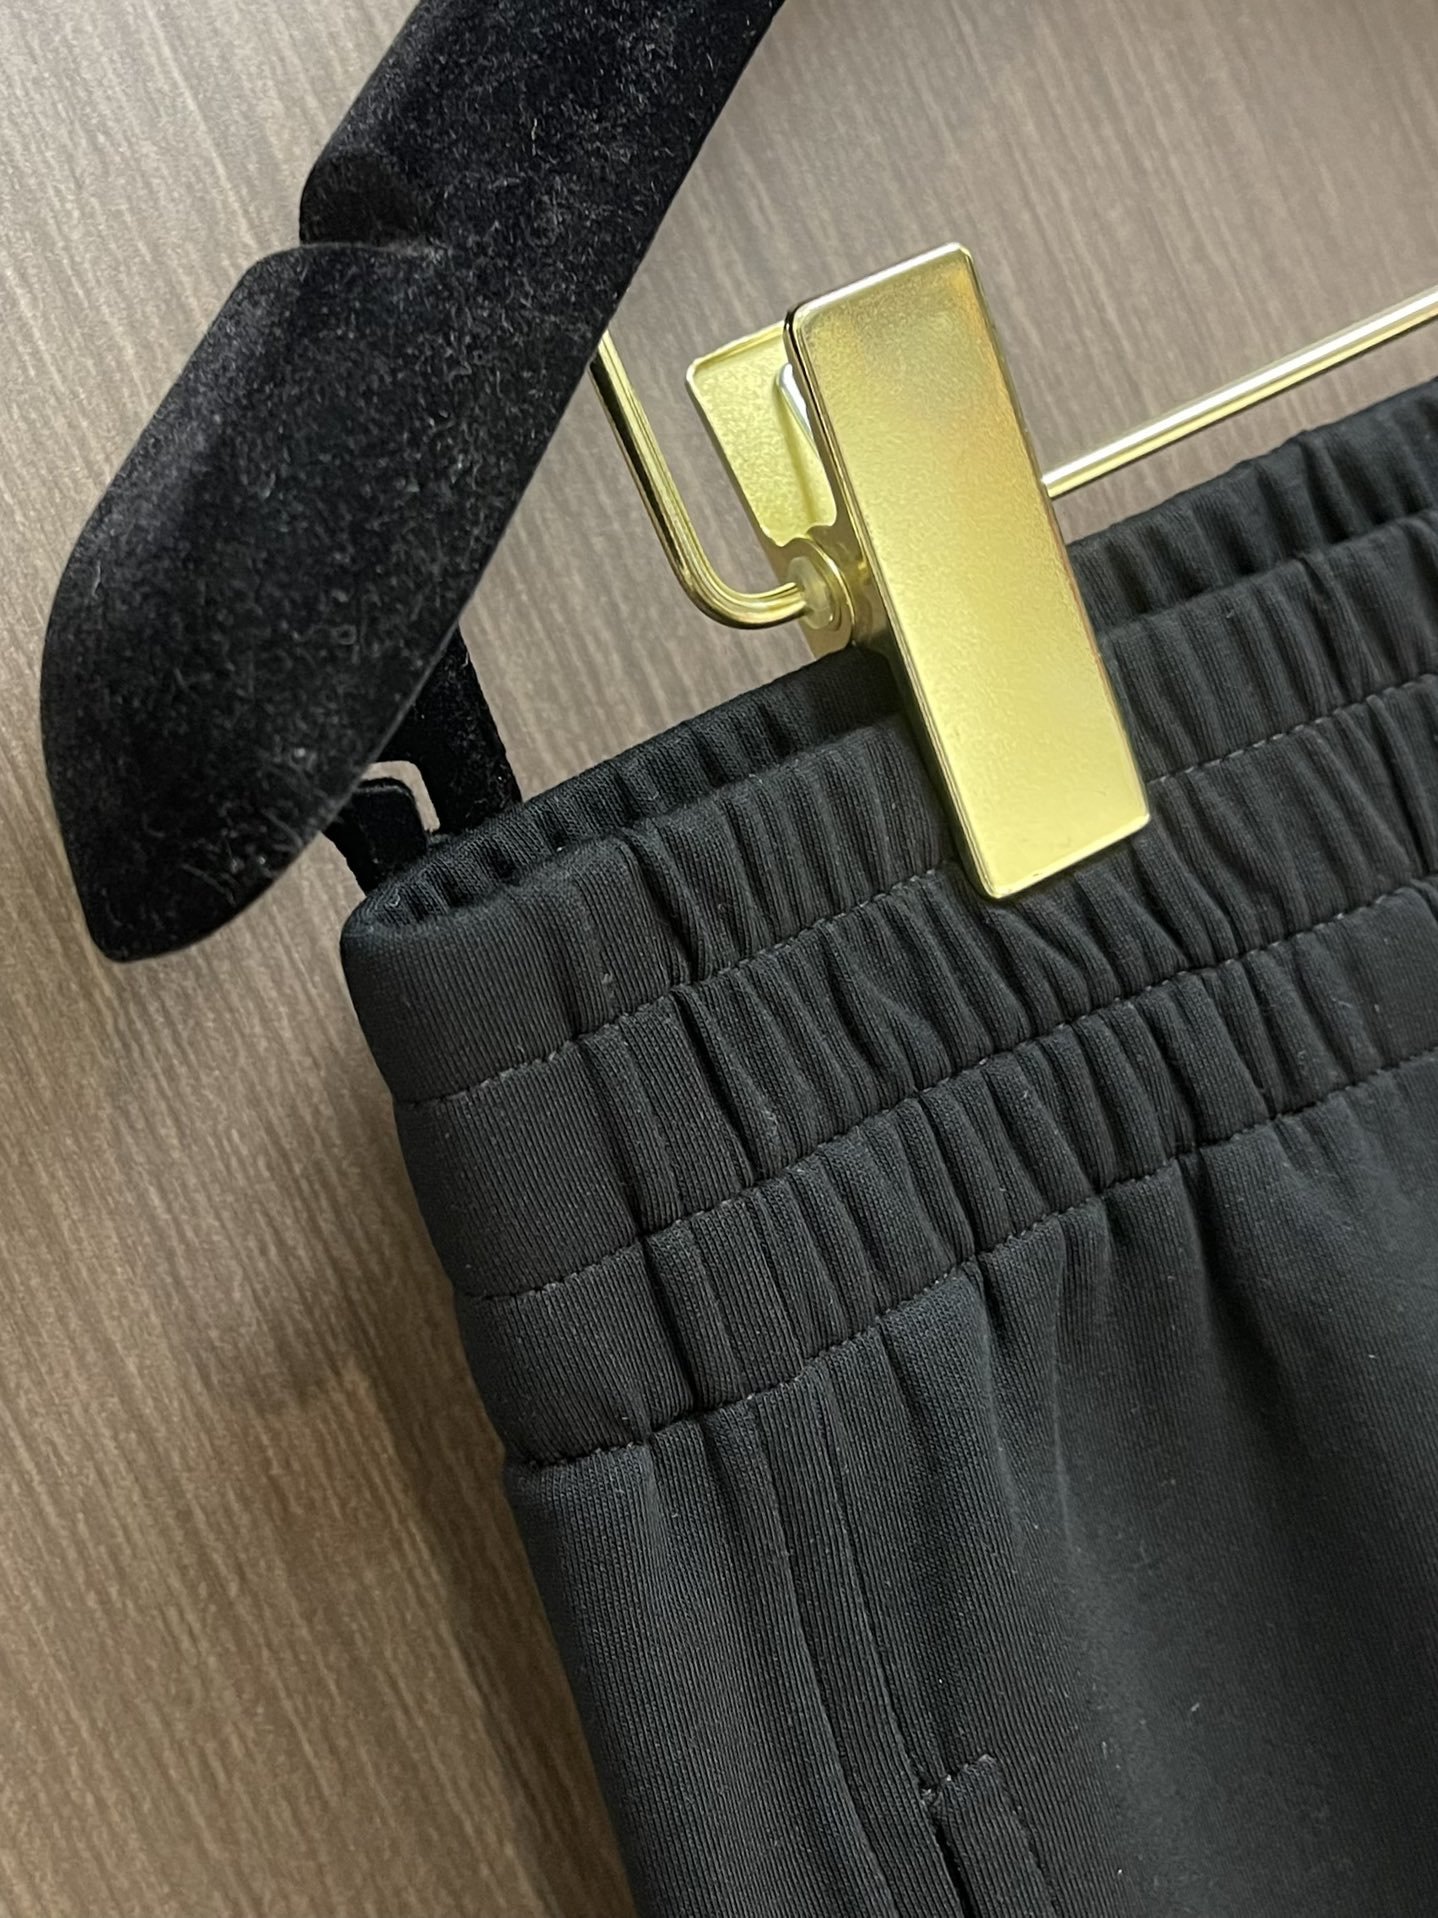 Burberry战马刺绣标识束腿休闲卫裤全新欧棉质地最大的特点就是柔软舒适不起球不变形绝对质量上的王者品